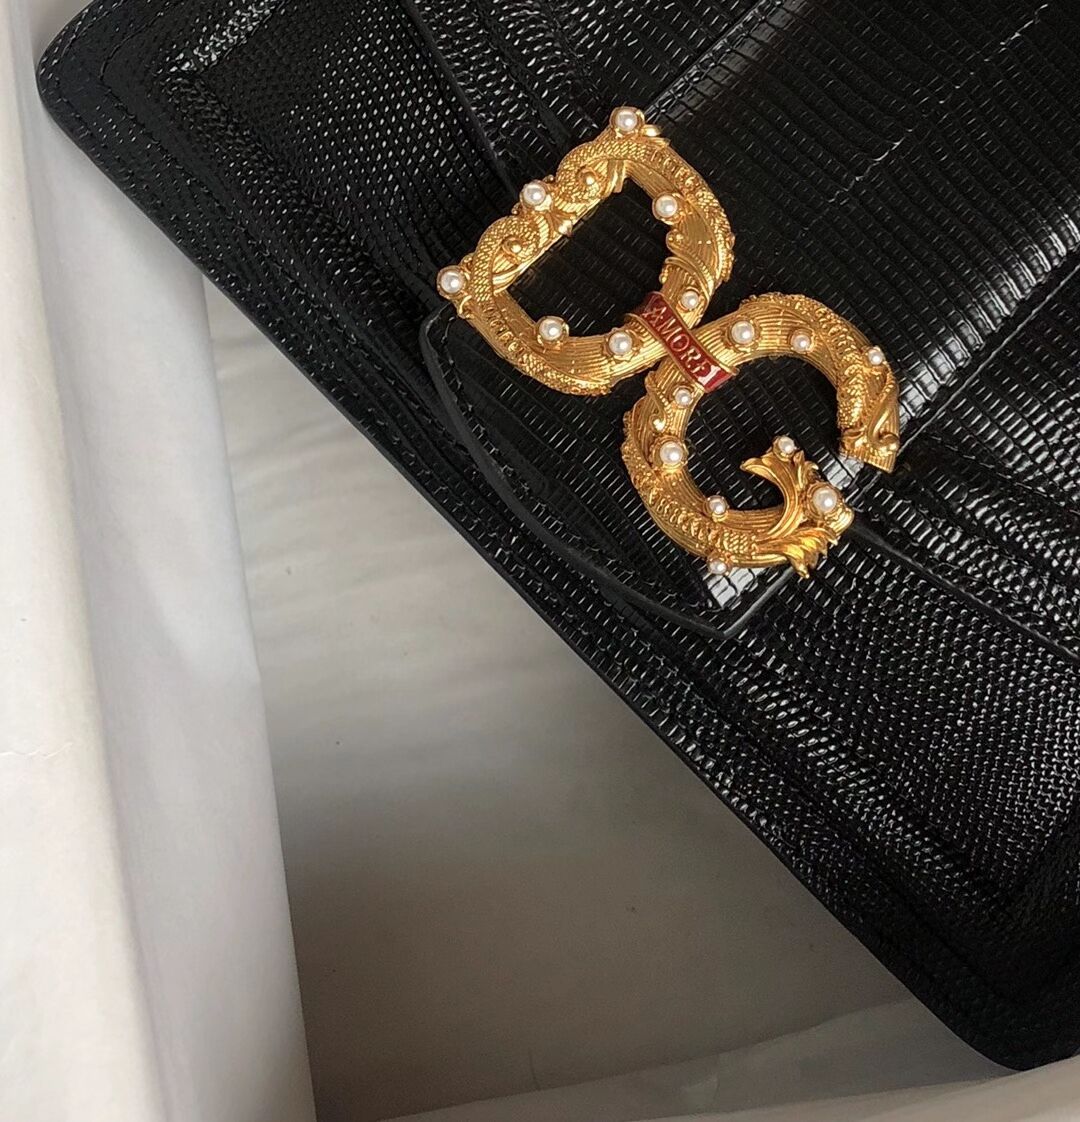 Dolce & Gabbana Origianl Lizard skin Leather Bag 4916F Black